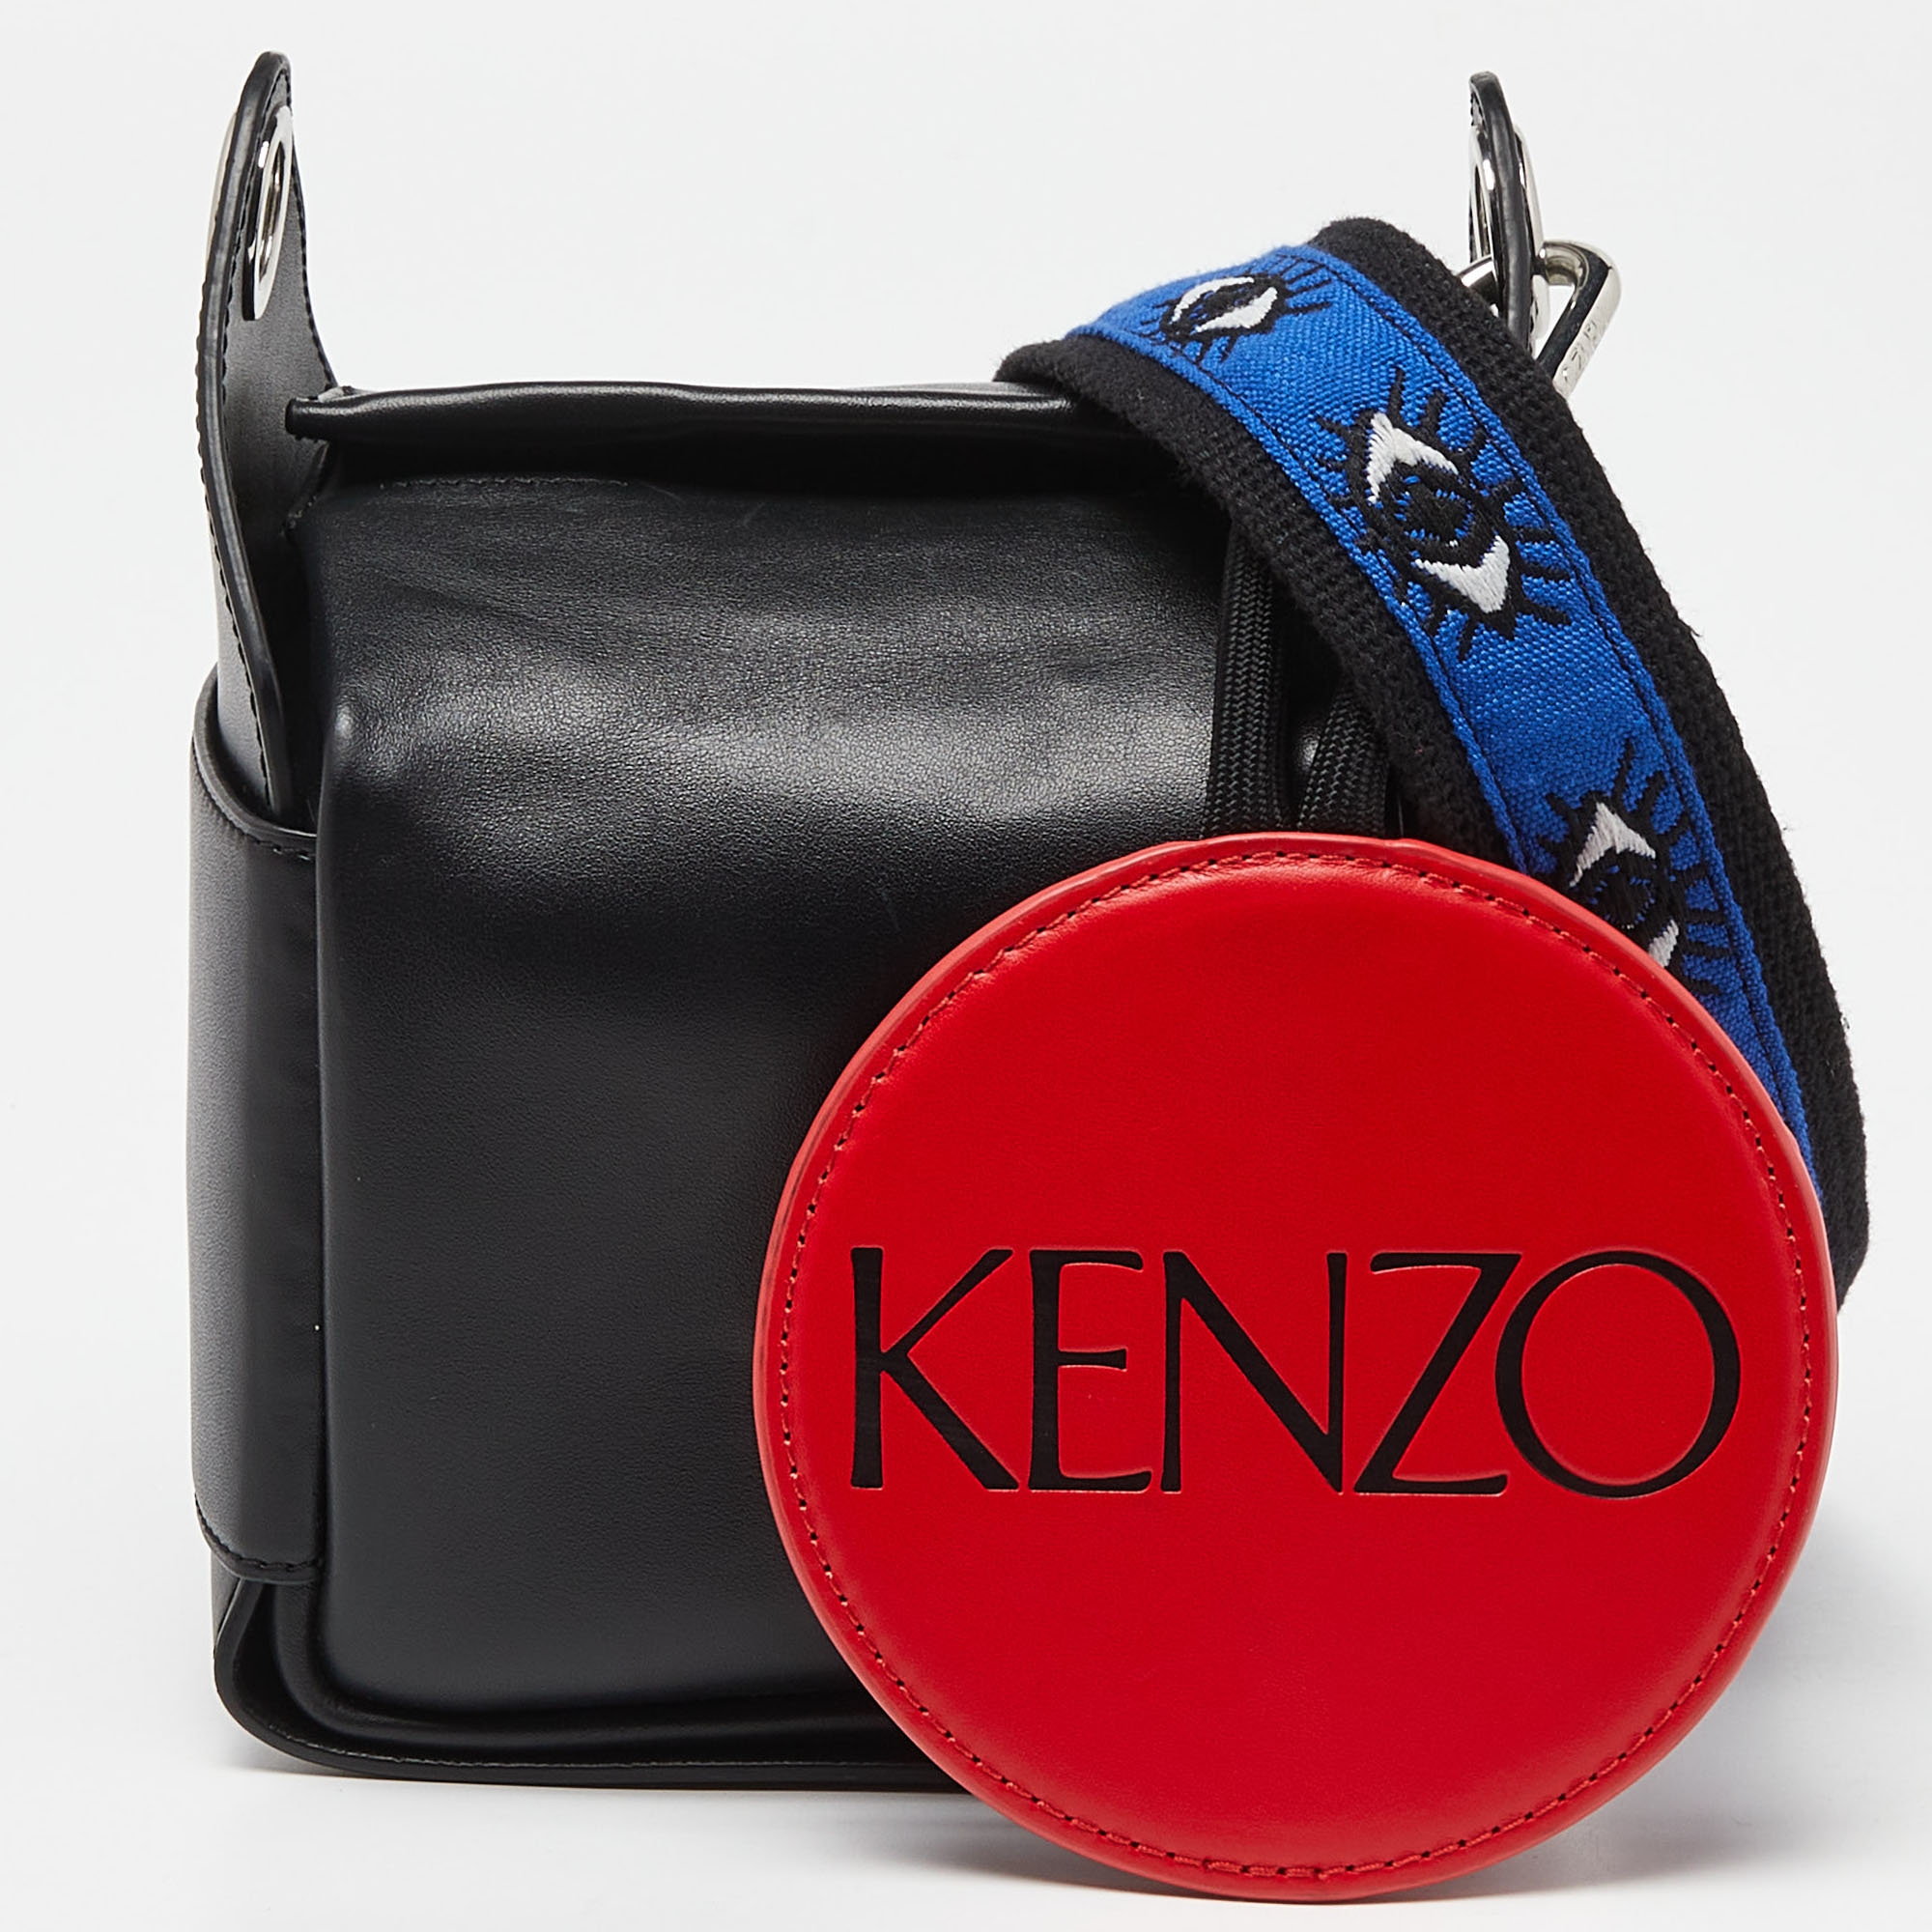 Pre-owned Kenzo Black Leather Crossbody Bag